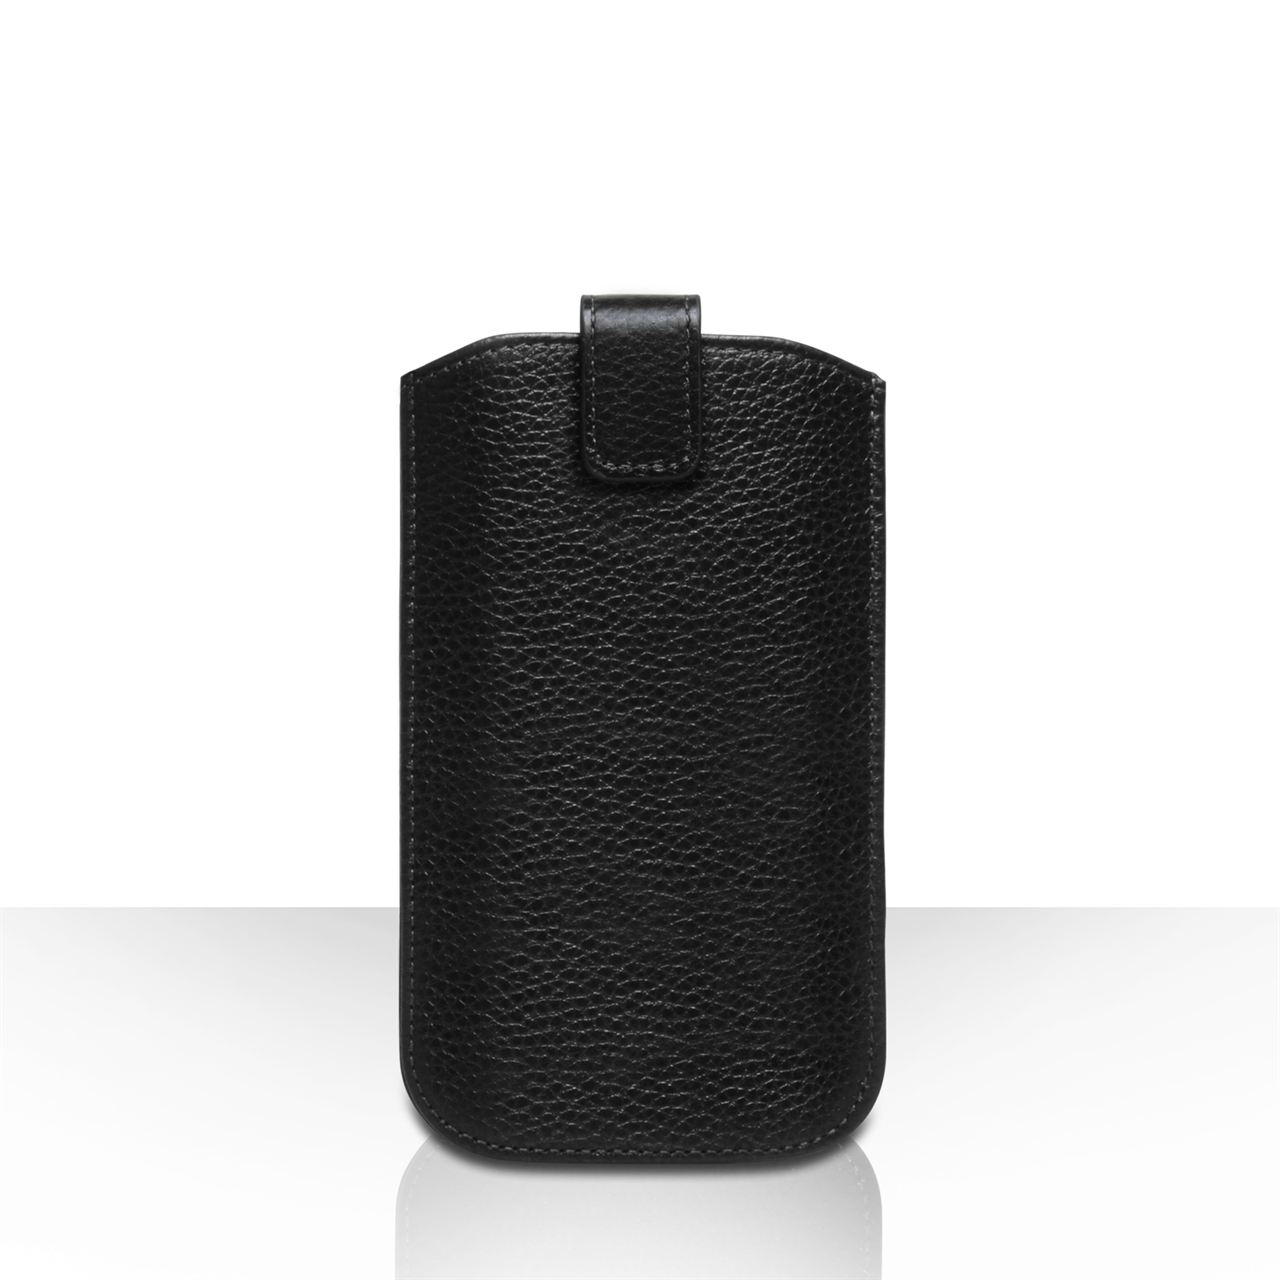 Caseflex Medium Real Leather Return Phone Pouch - Black